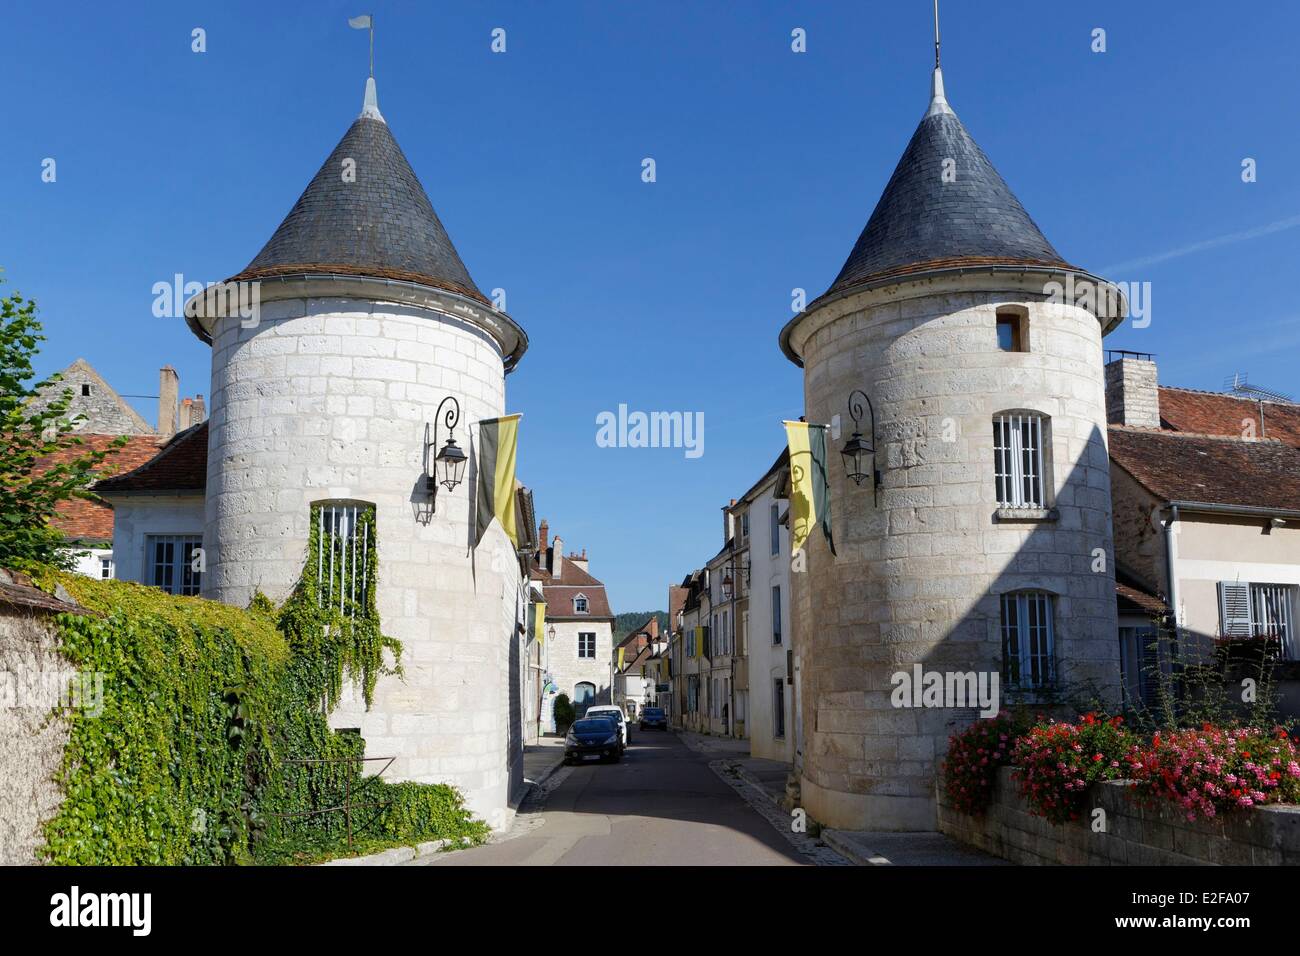 France, Yonne, Chablis, Noel door, porte Noel Stock Photo - Alamy